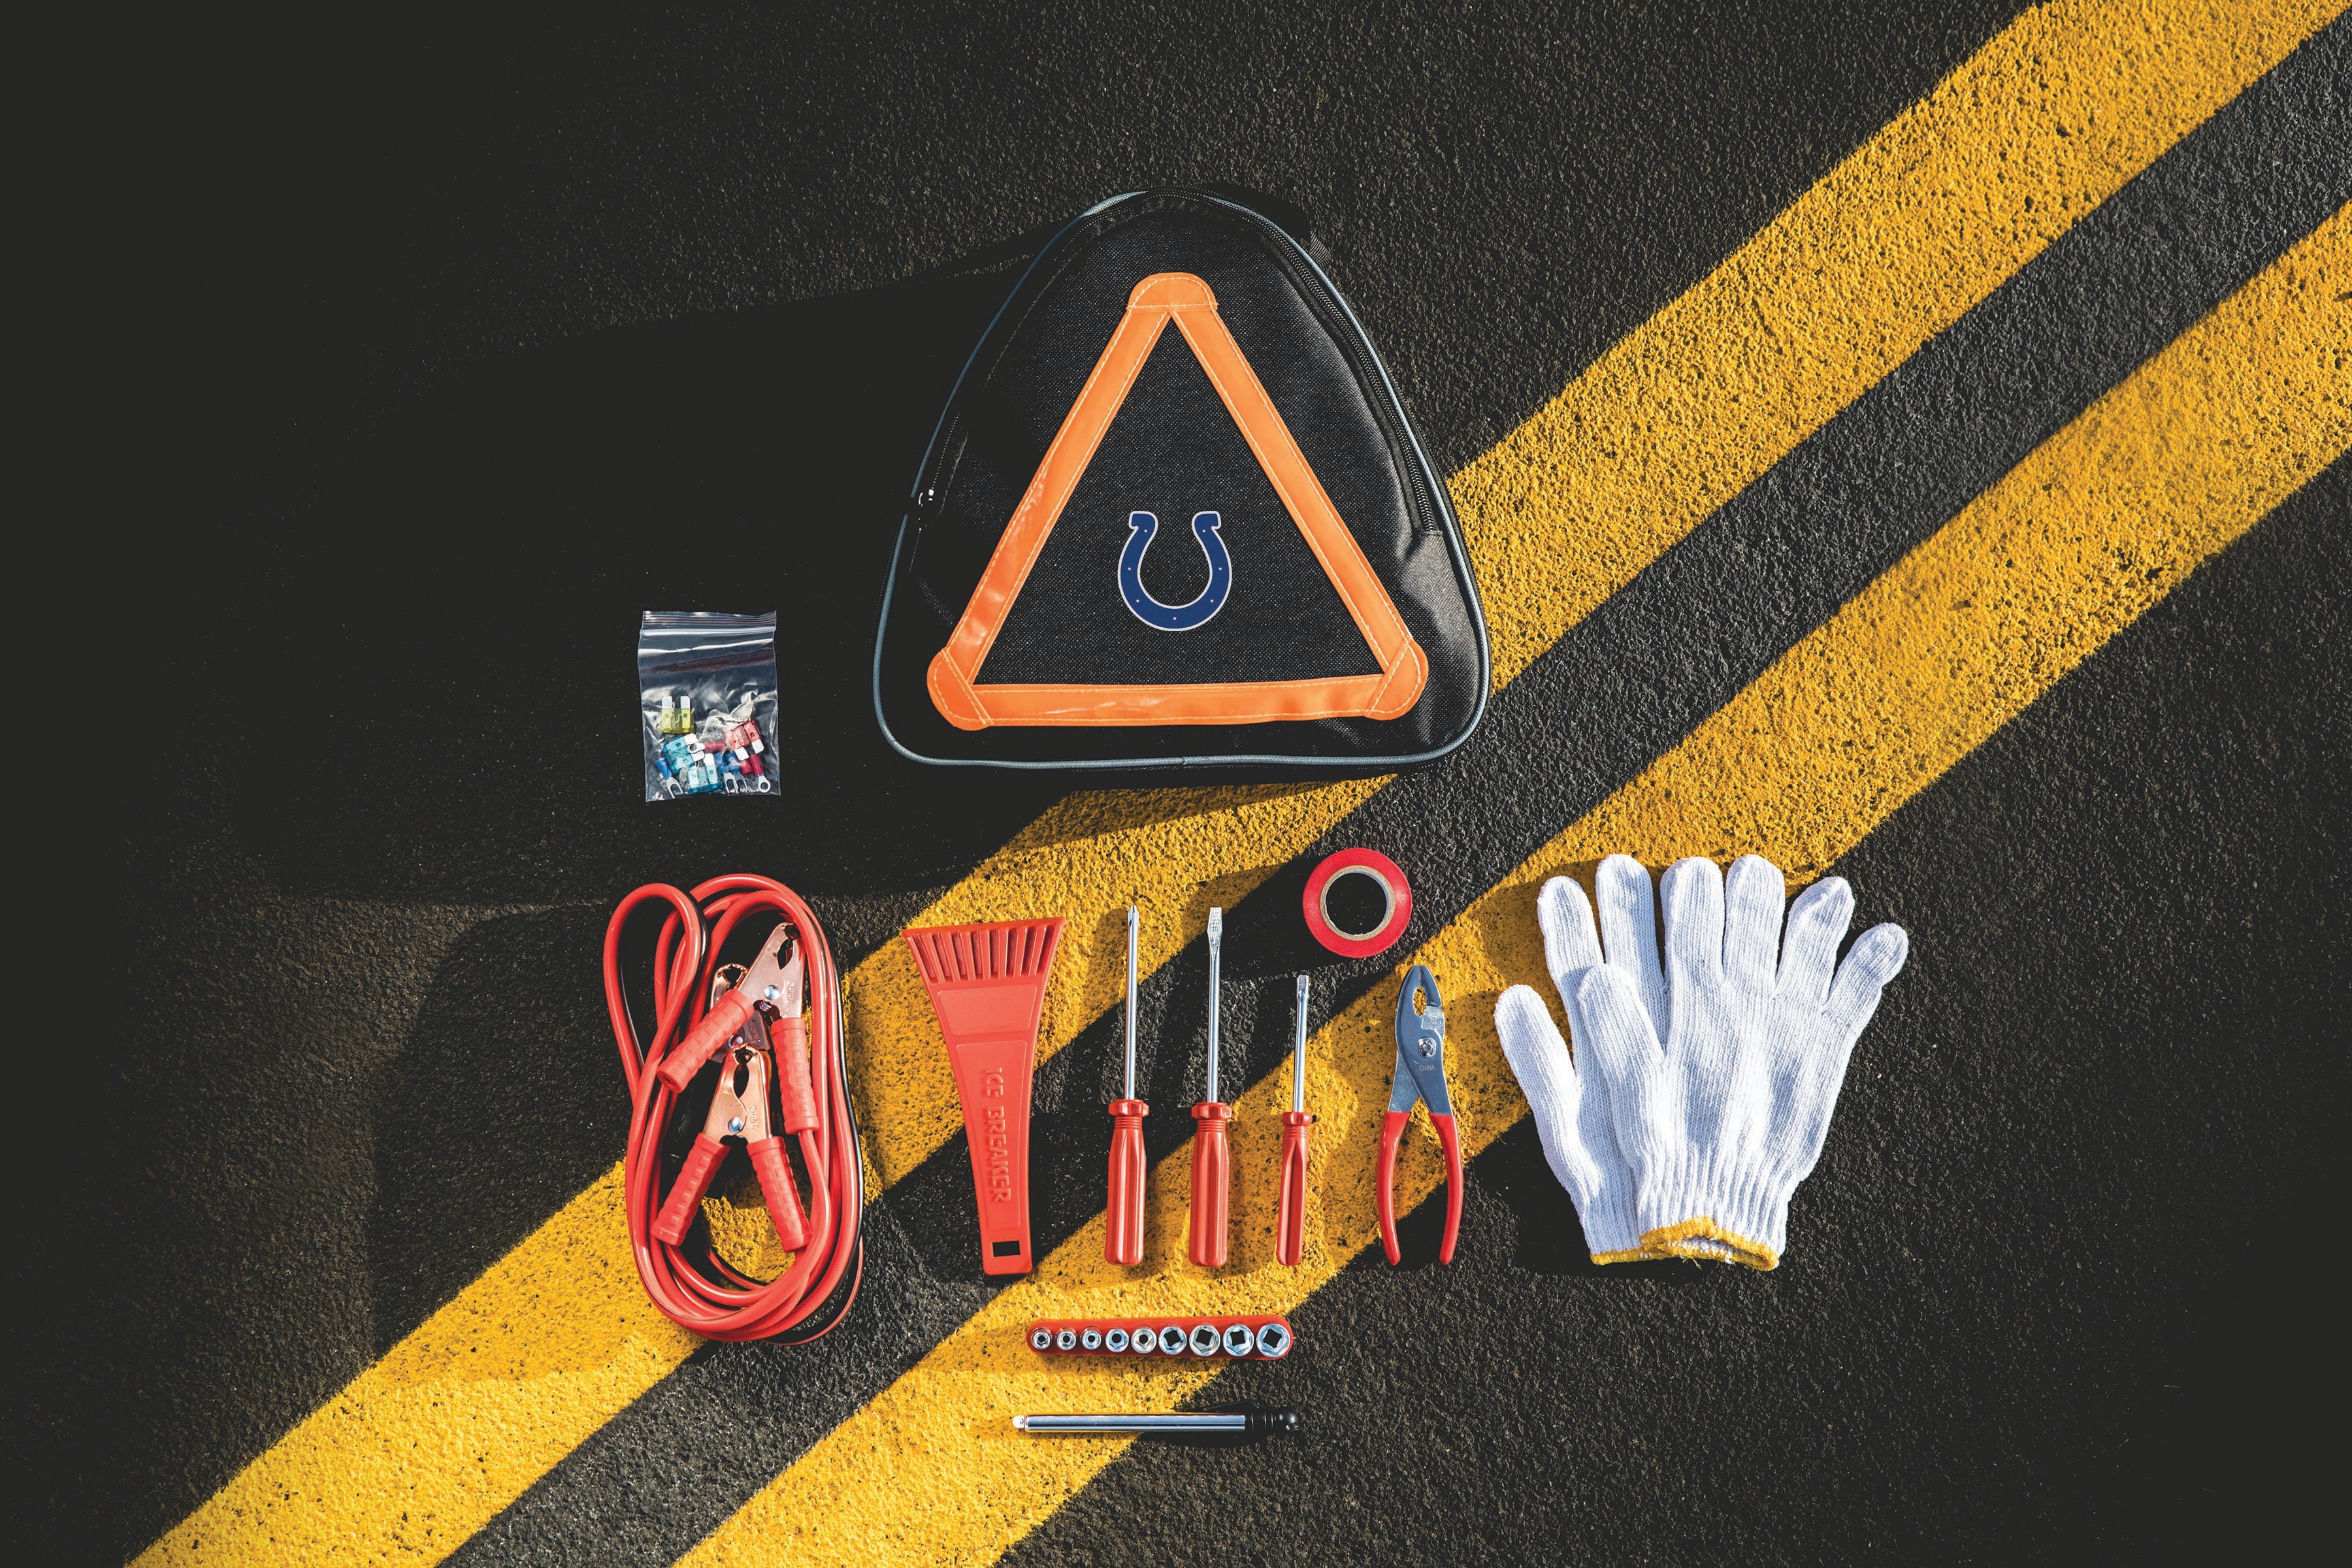 Indianapolis Colts - Roadside Emergency Car Kit